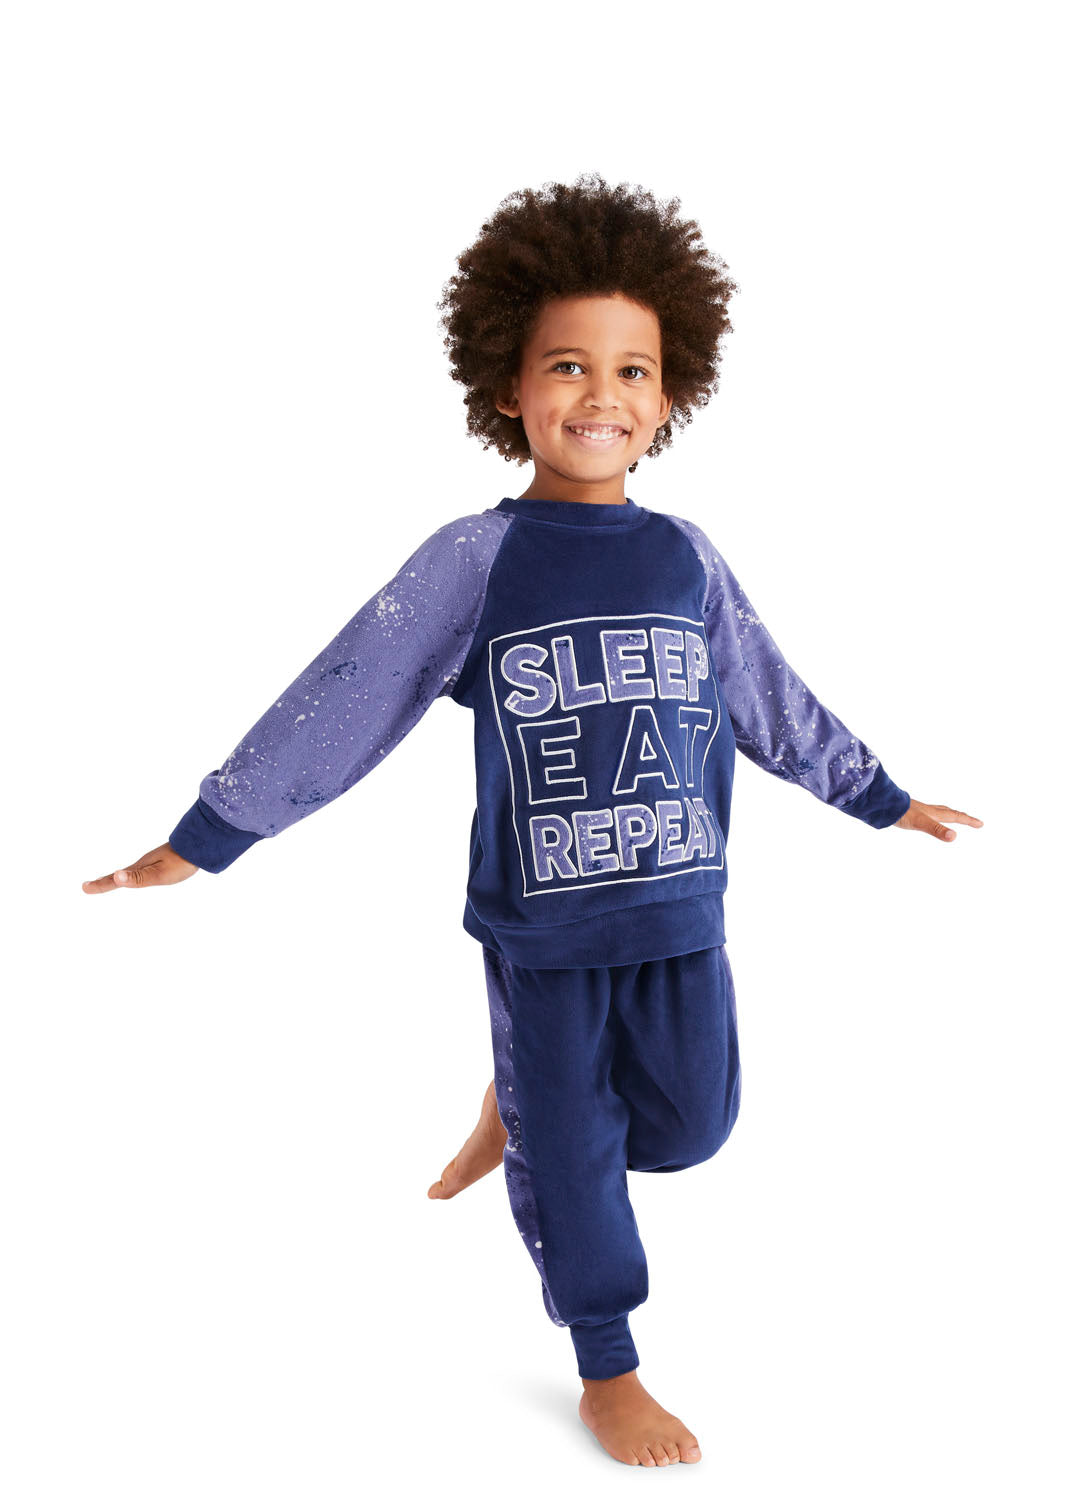 Fun Little Boy wearing a Blue Splatter Pajama Set